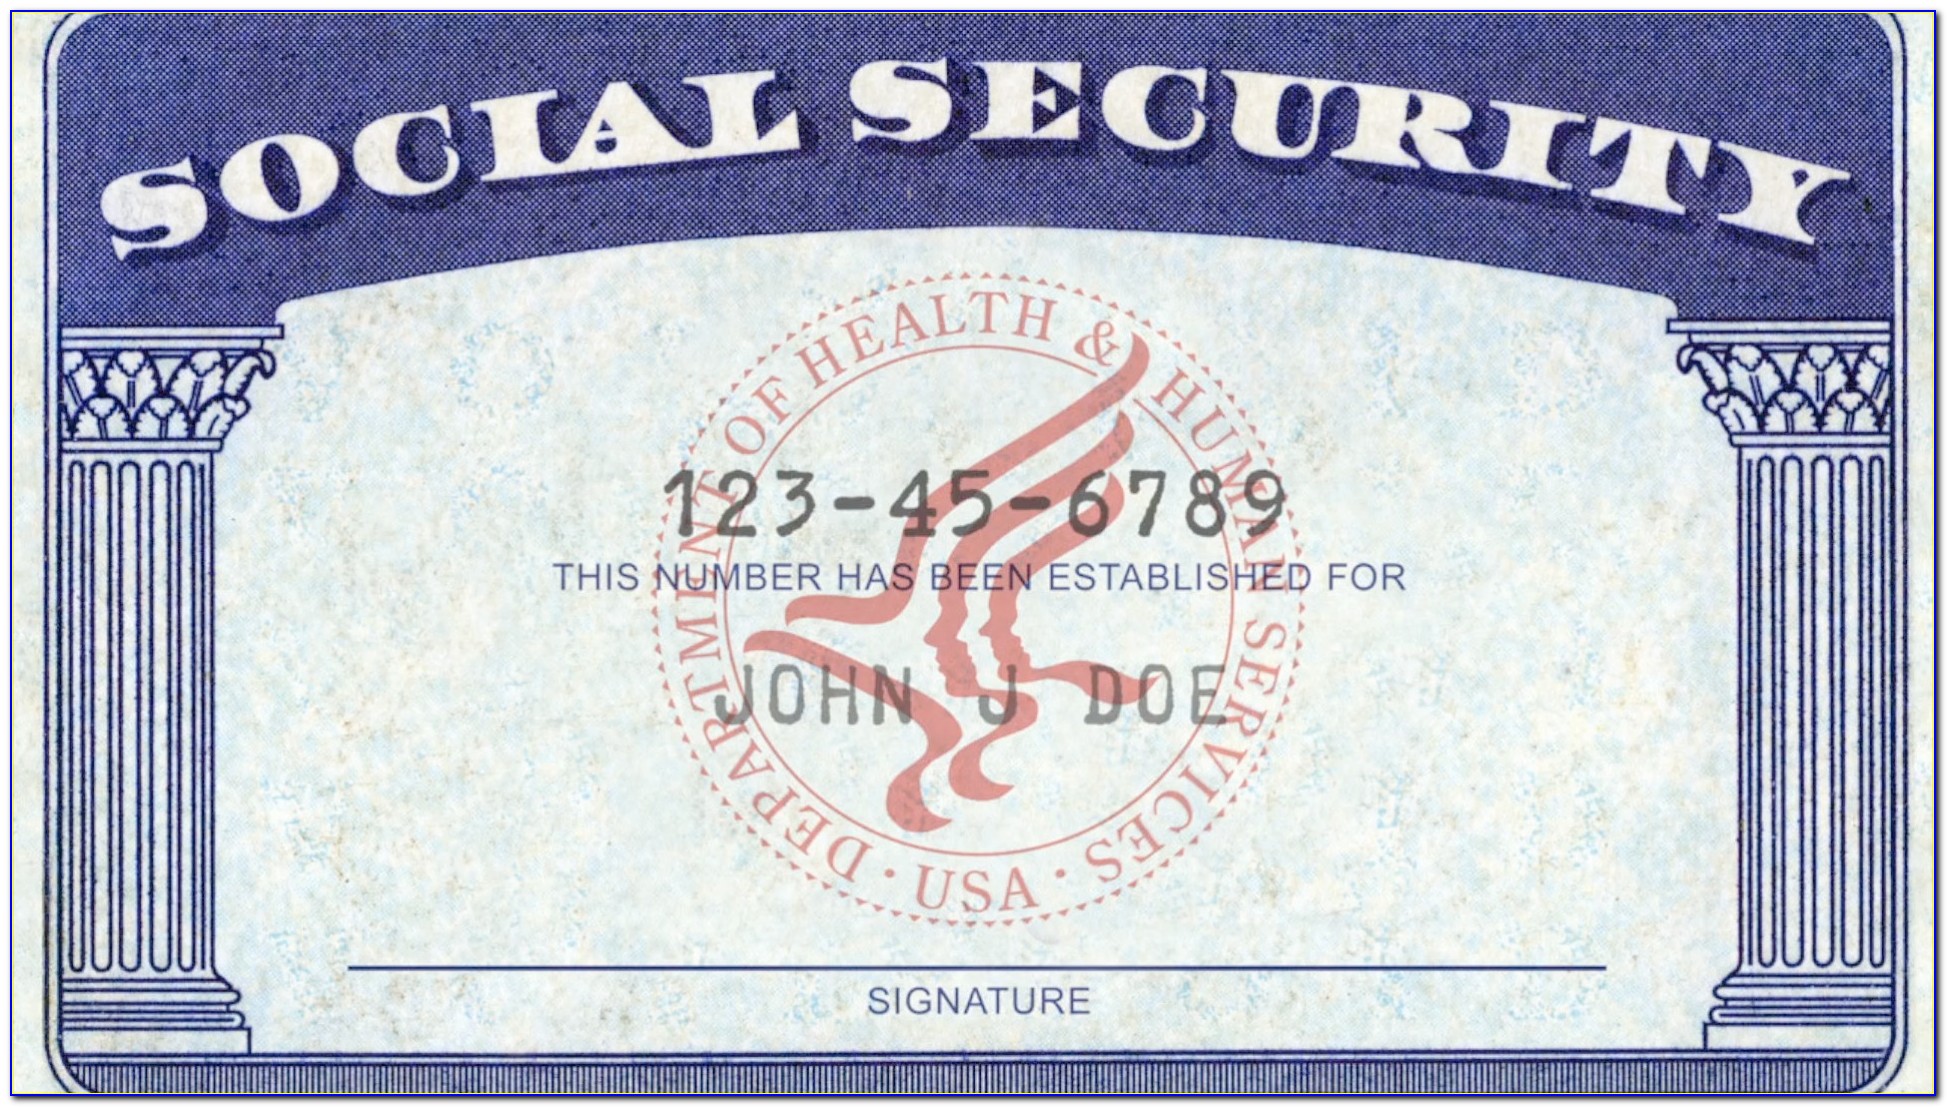 Social Security Card Template Psd Free